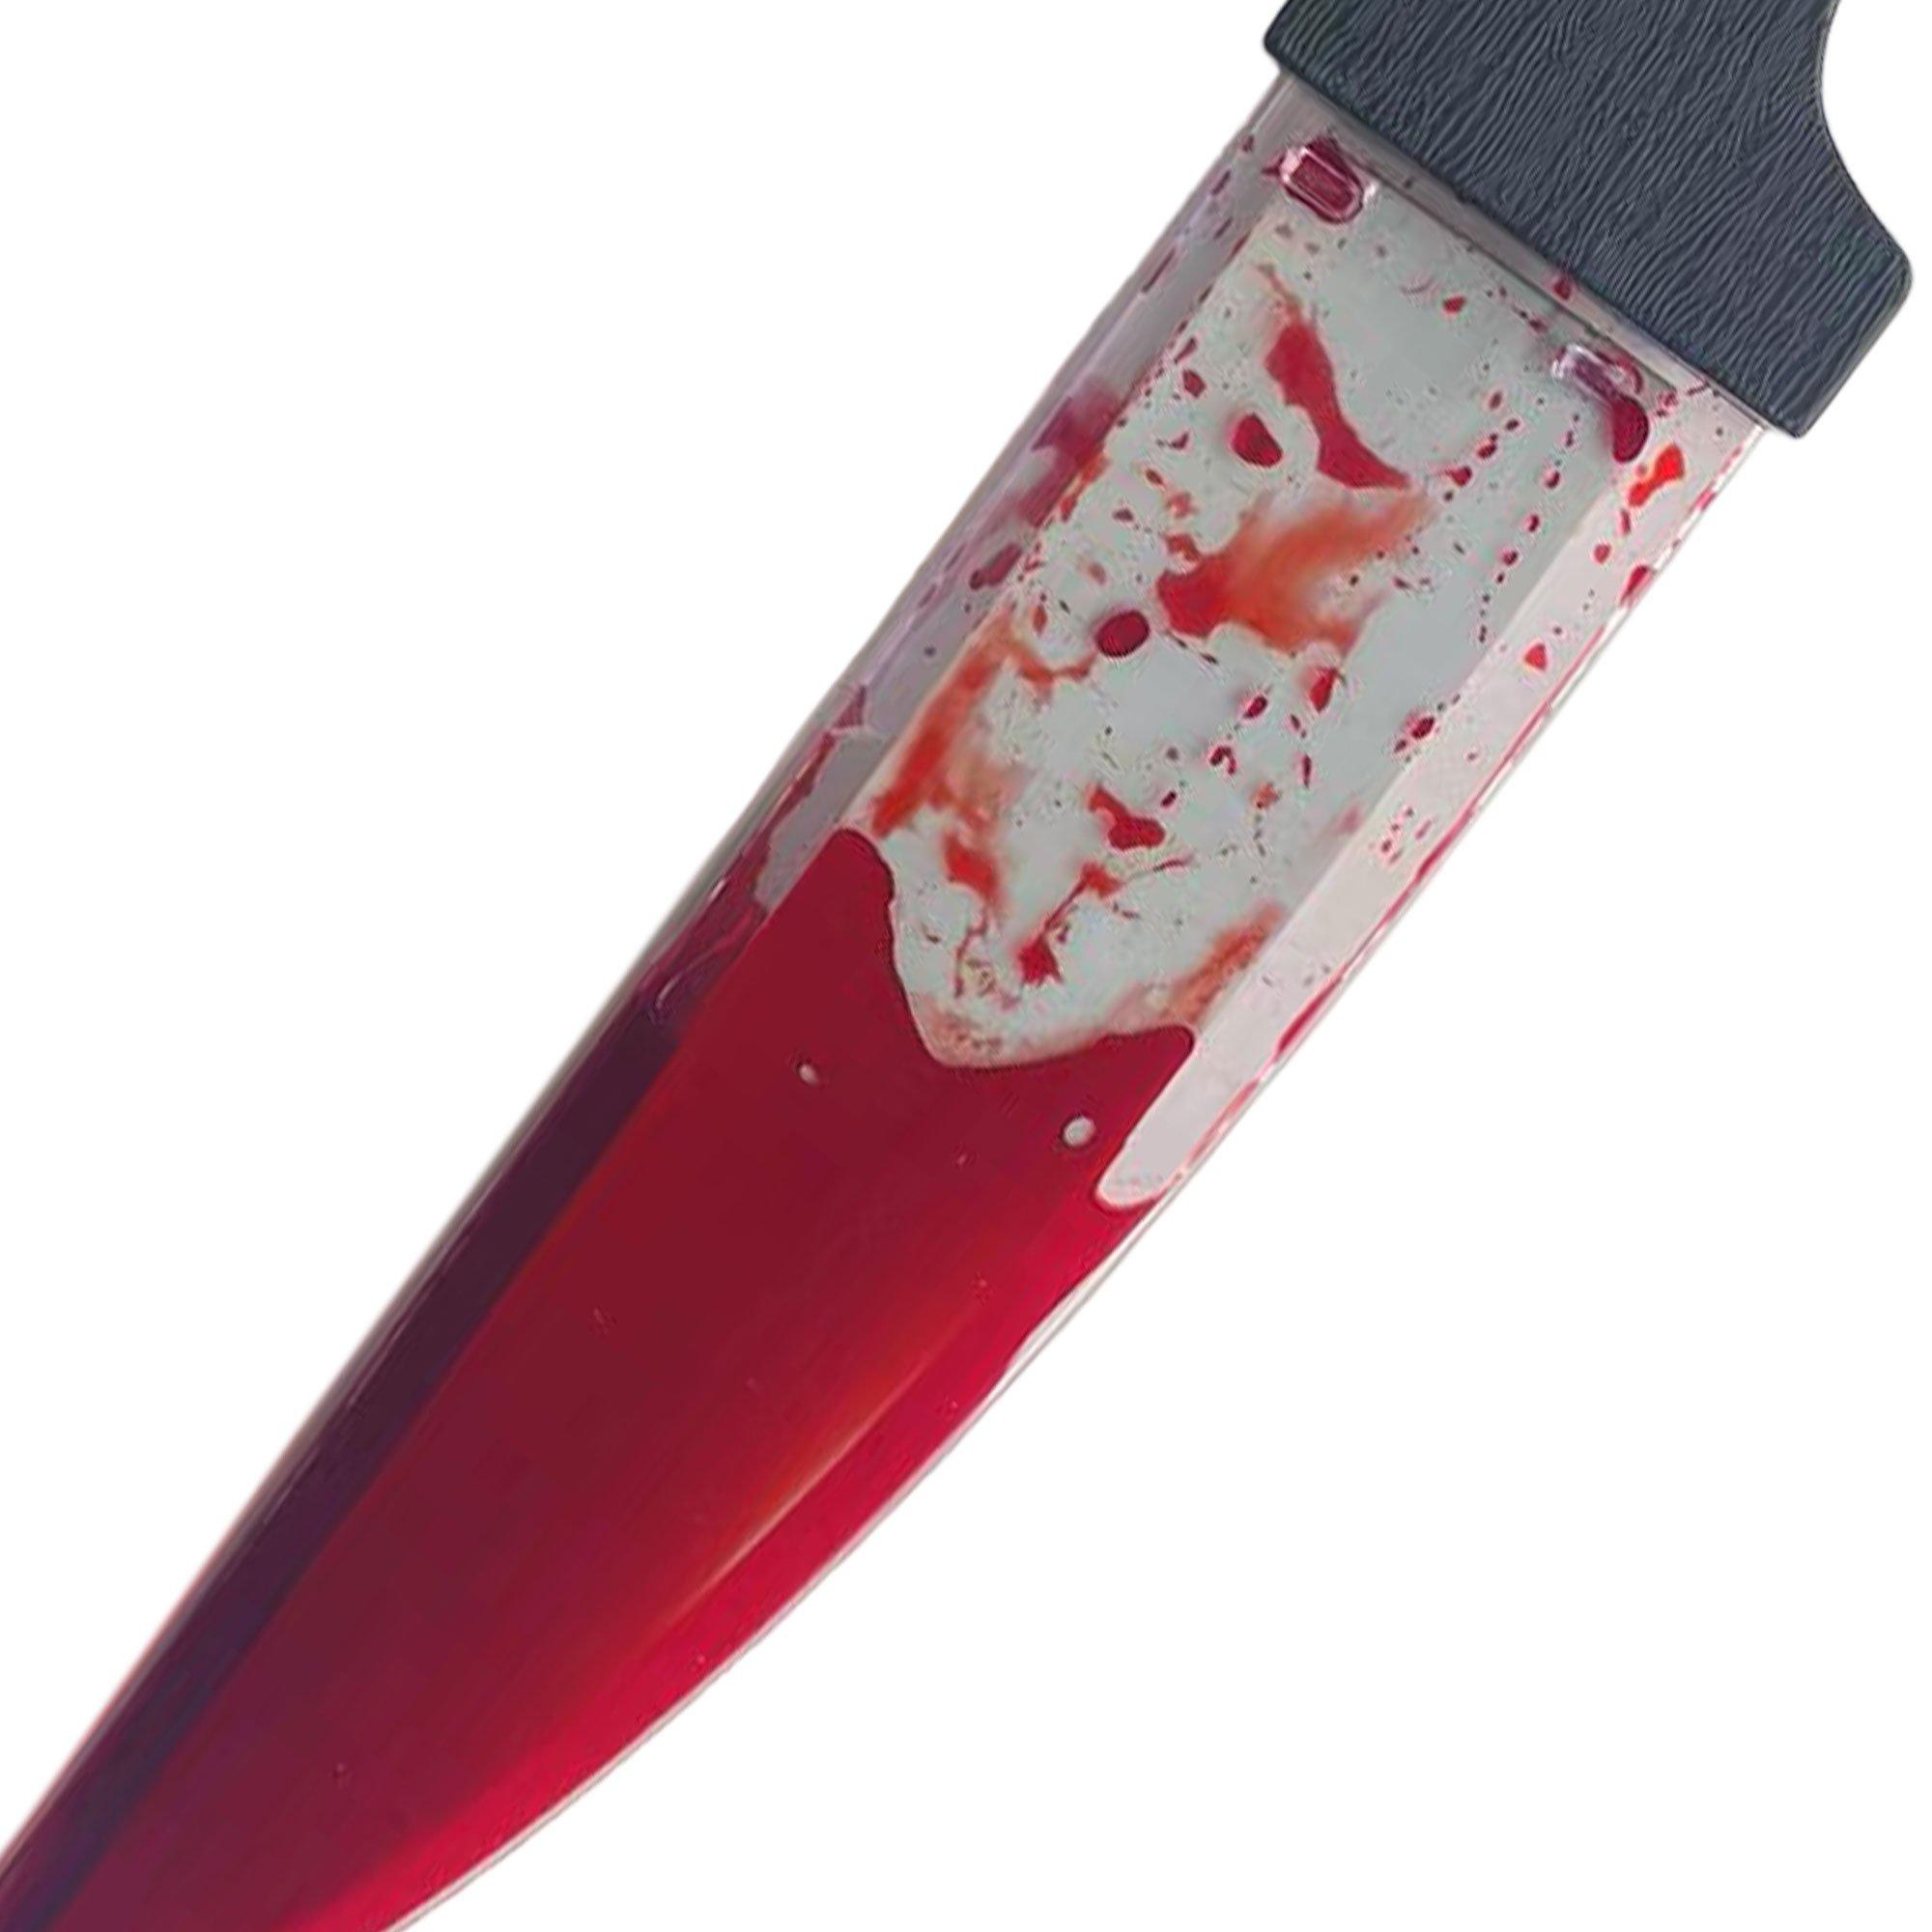 Bleeding Kitchen Knife Prop, 18in